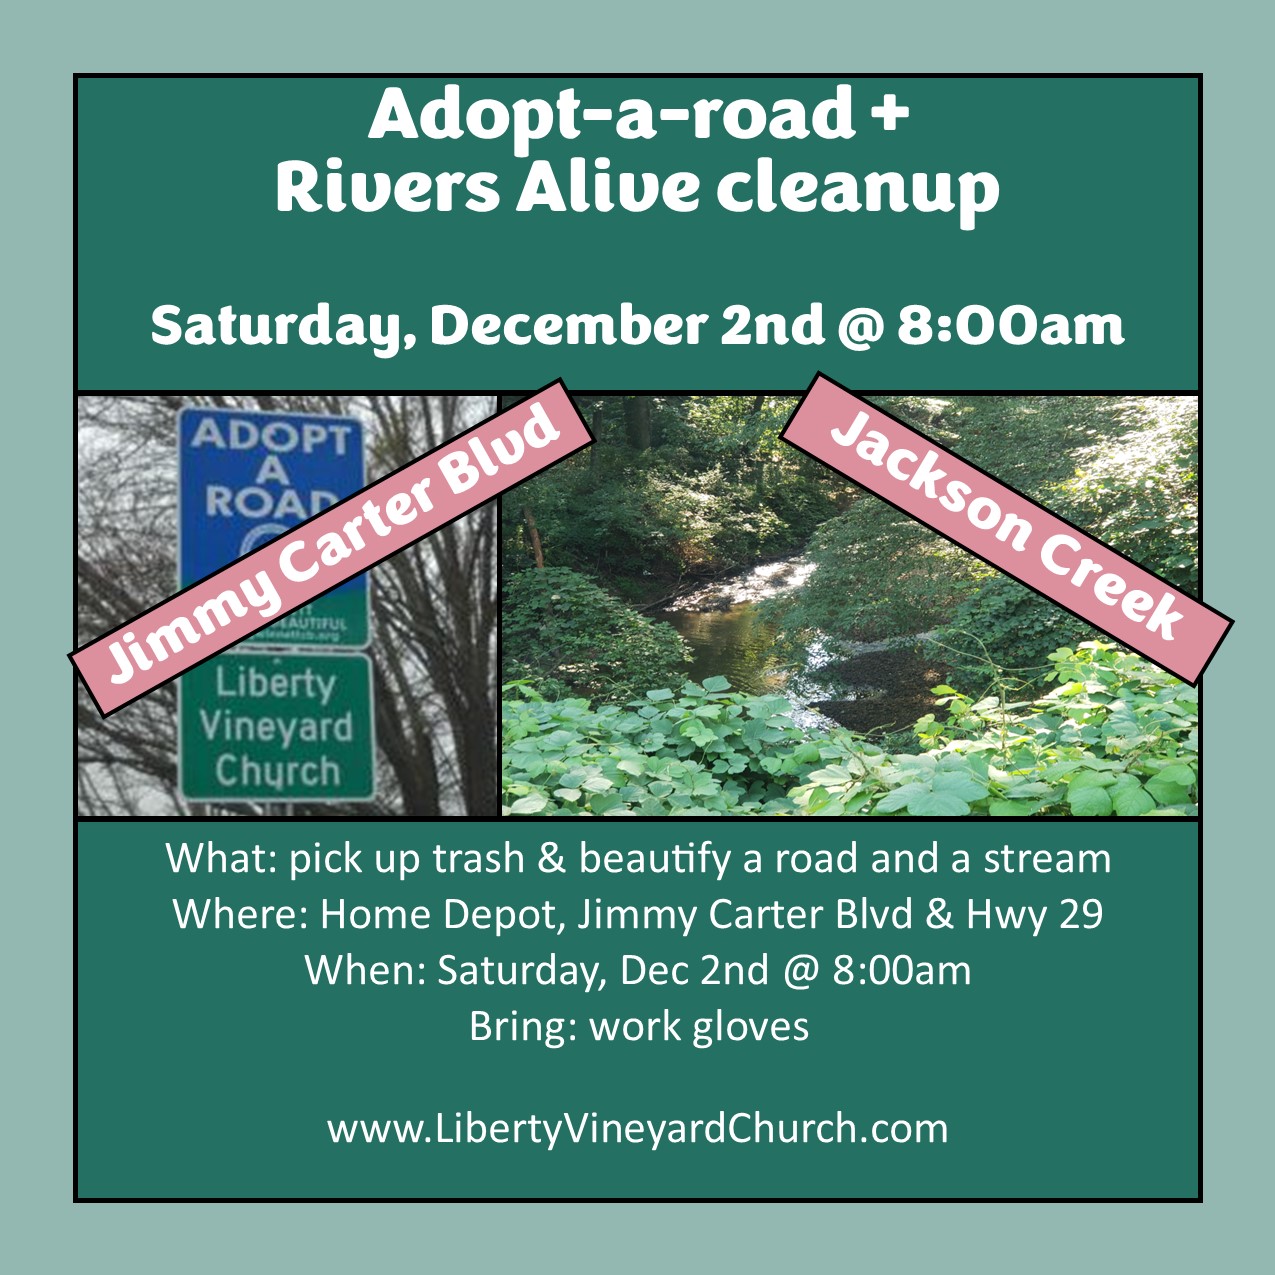 Adopt-a-road & Rivers Alive cleanup (Saturday, Dec 2nd @ 8:00am)